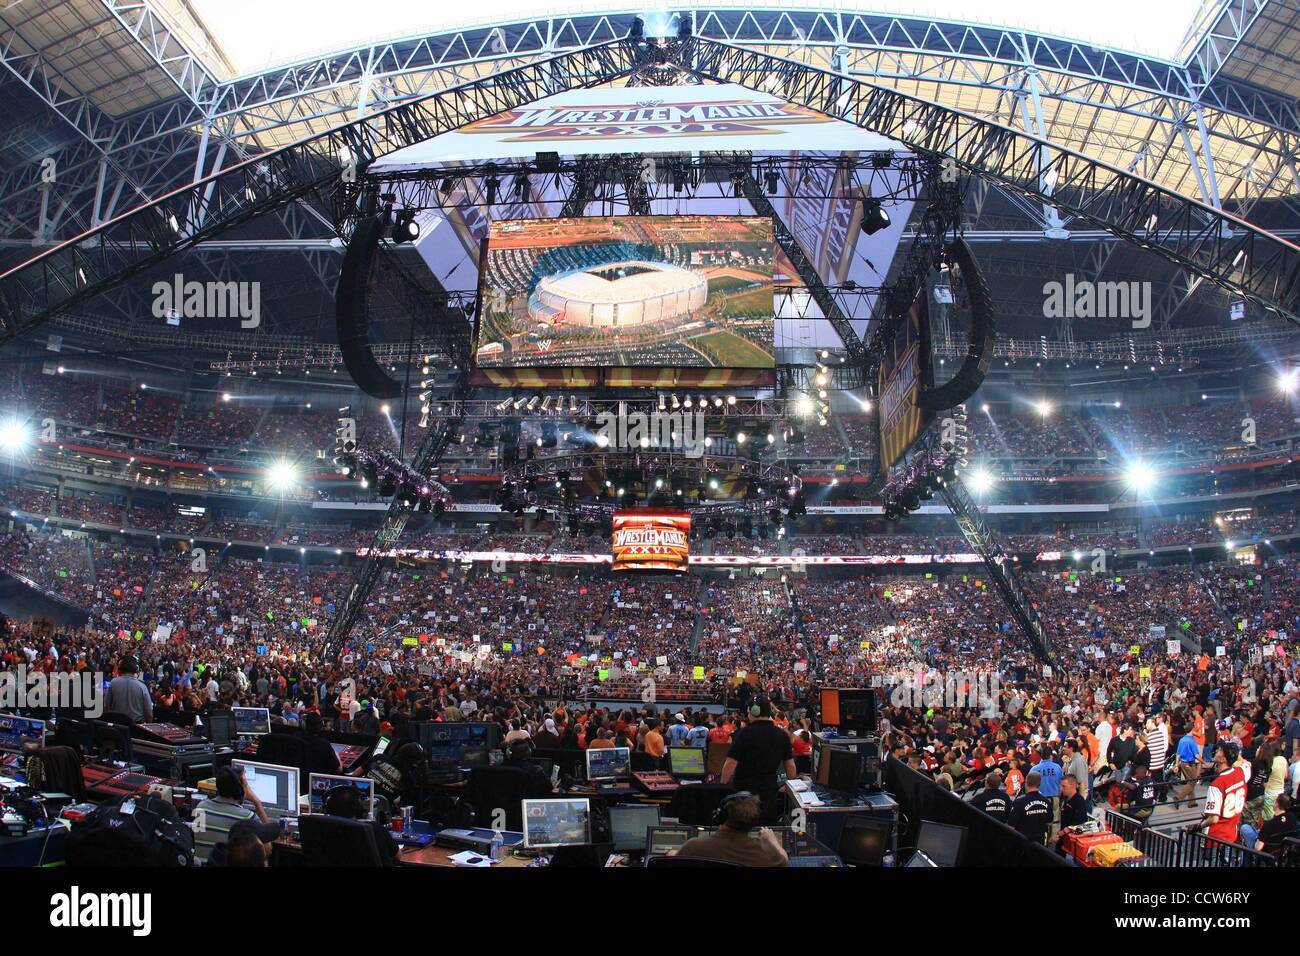 WWE Royal Rumble 2010, State Farm Arena, DOWNLOAD LINK